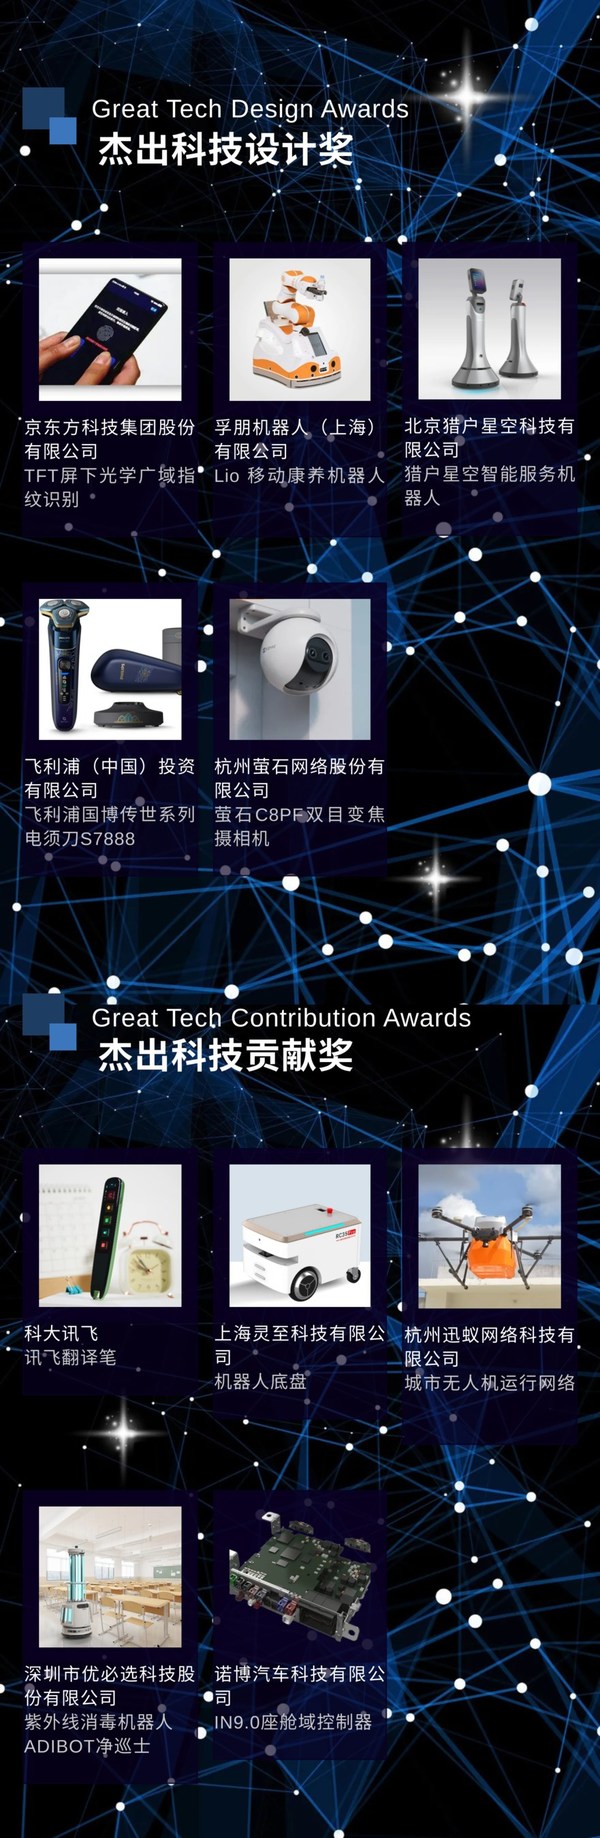 Great Tech Awards 2021获奖名单